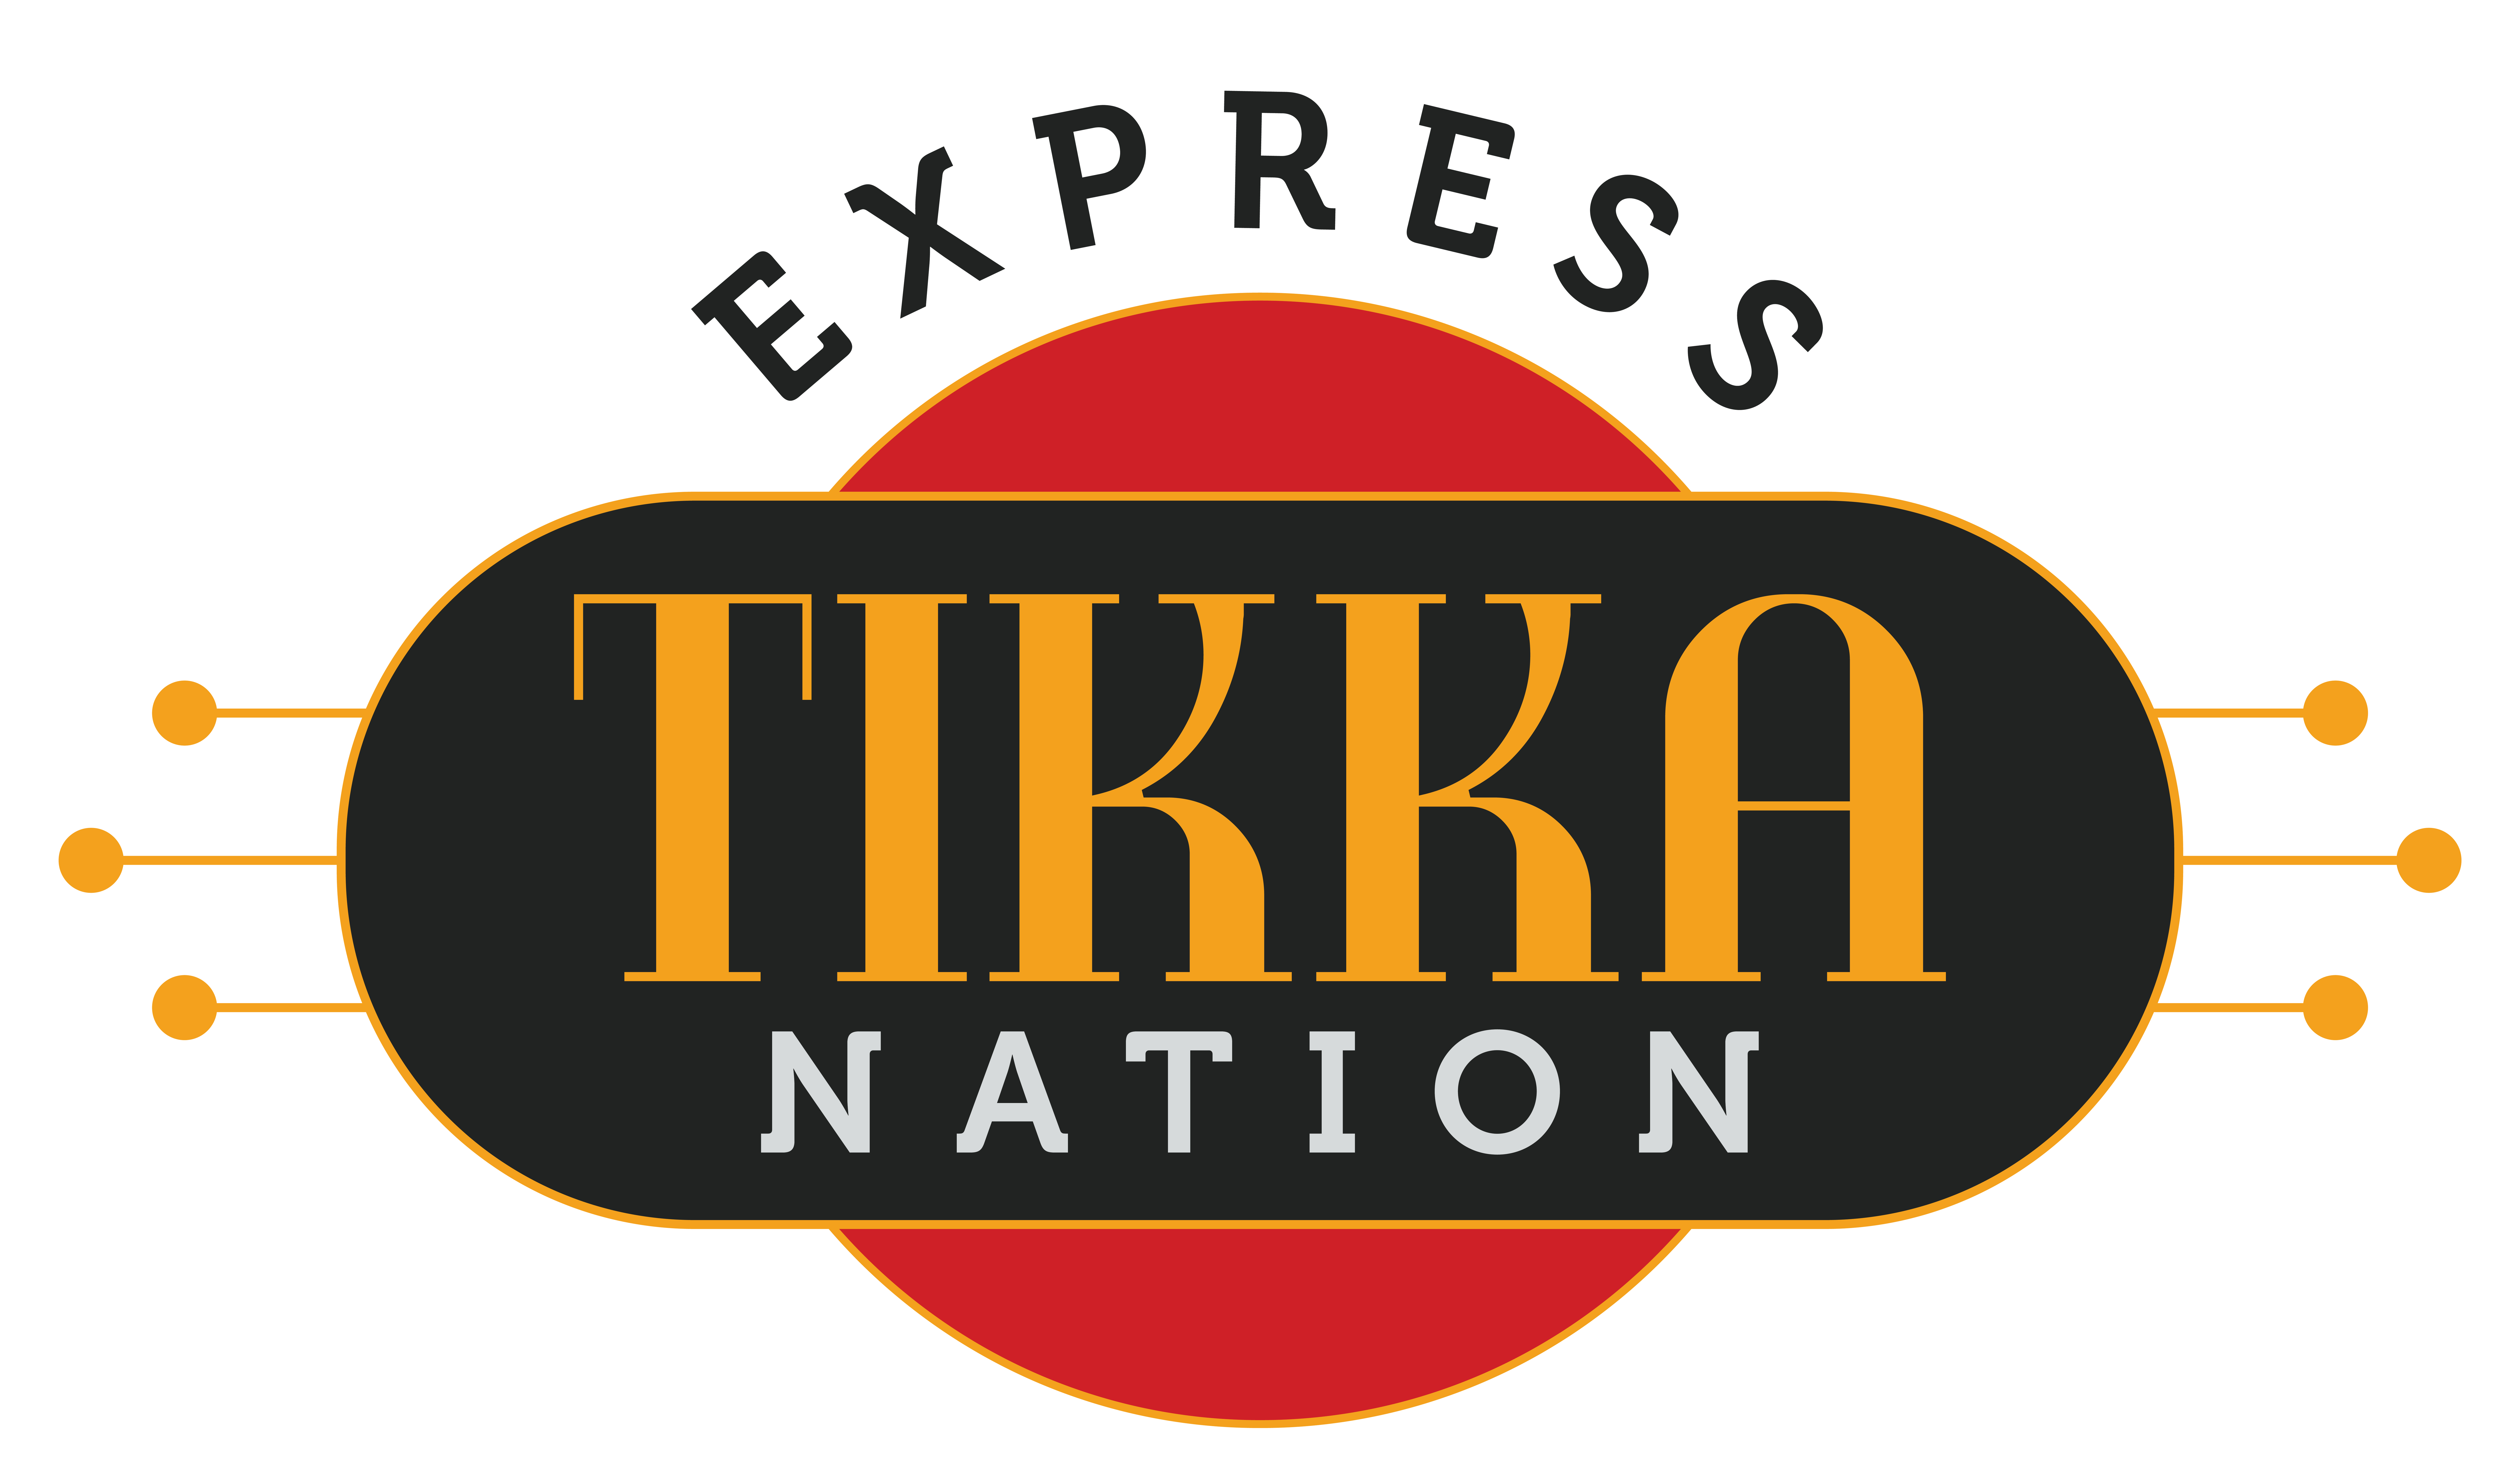 Tikka Nation